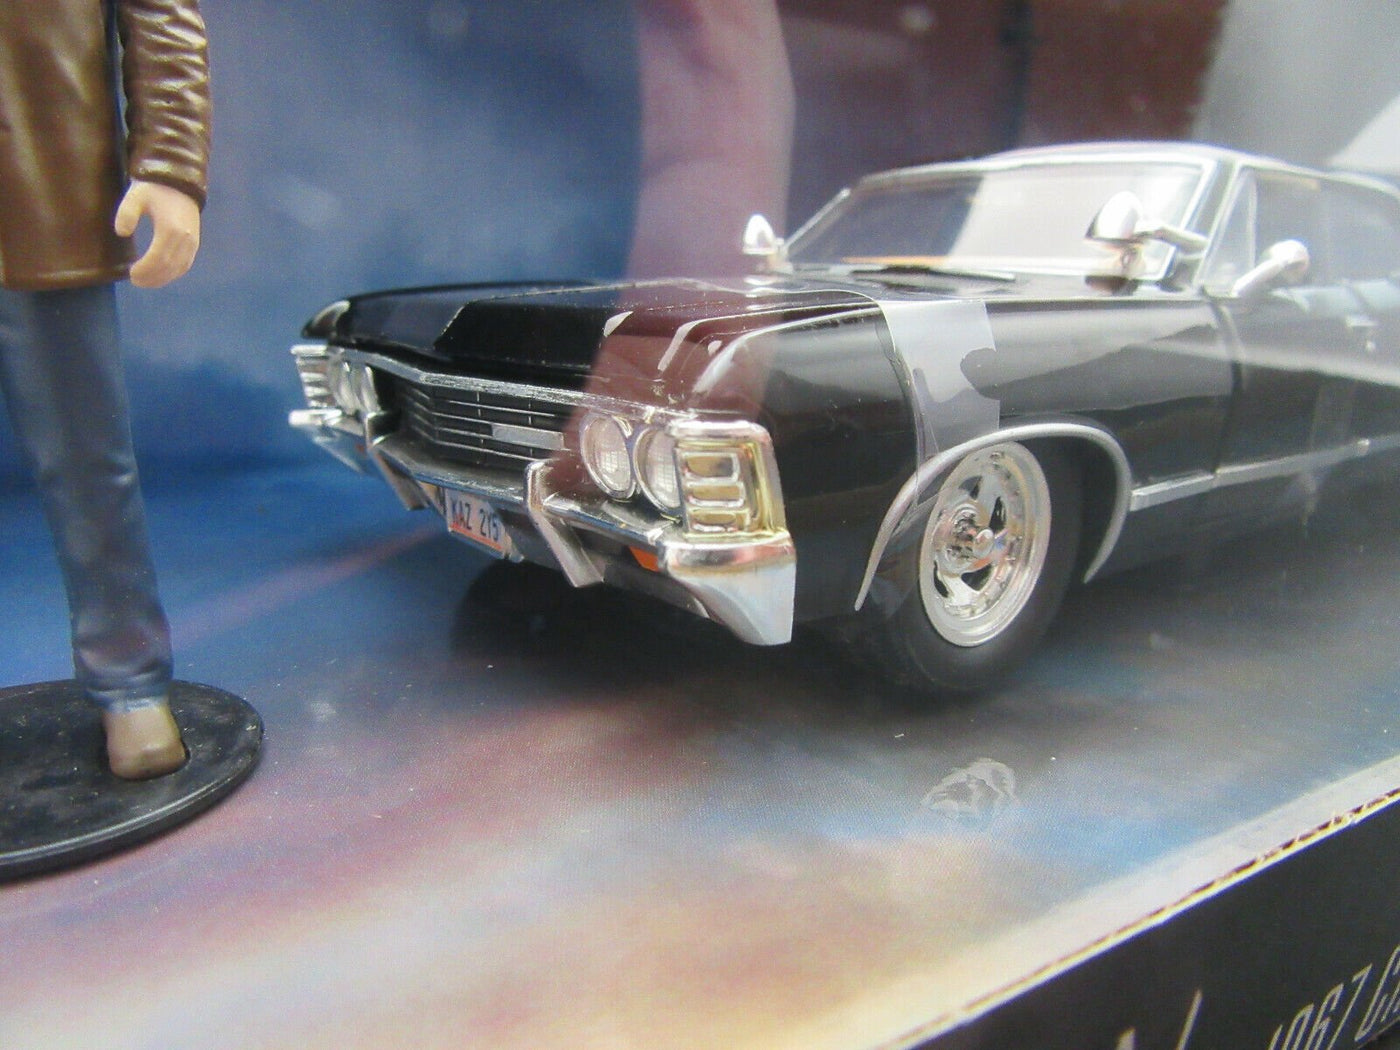 Dean Winchester & 1967 Chevy Impala SS Sedan ~ Die Cast ~ Supernatural ~ 1:24